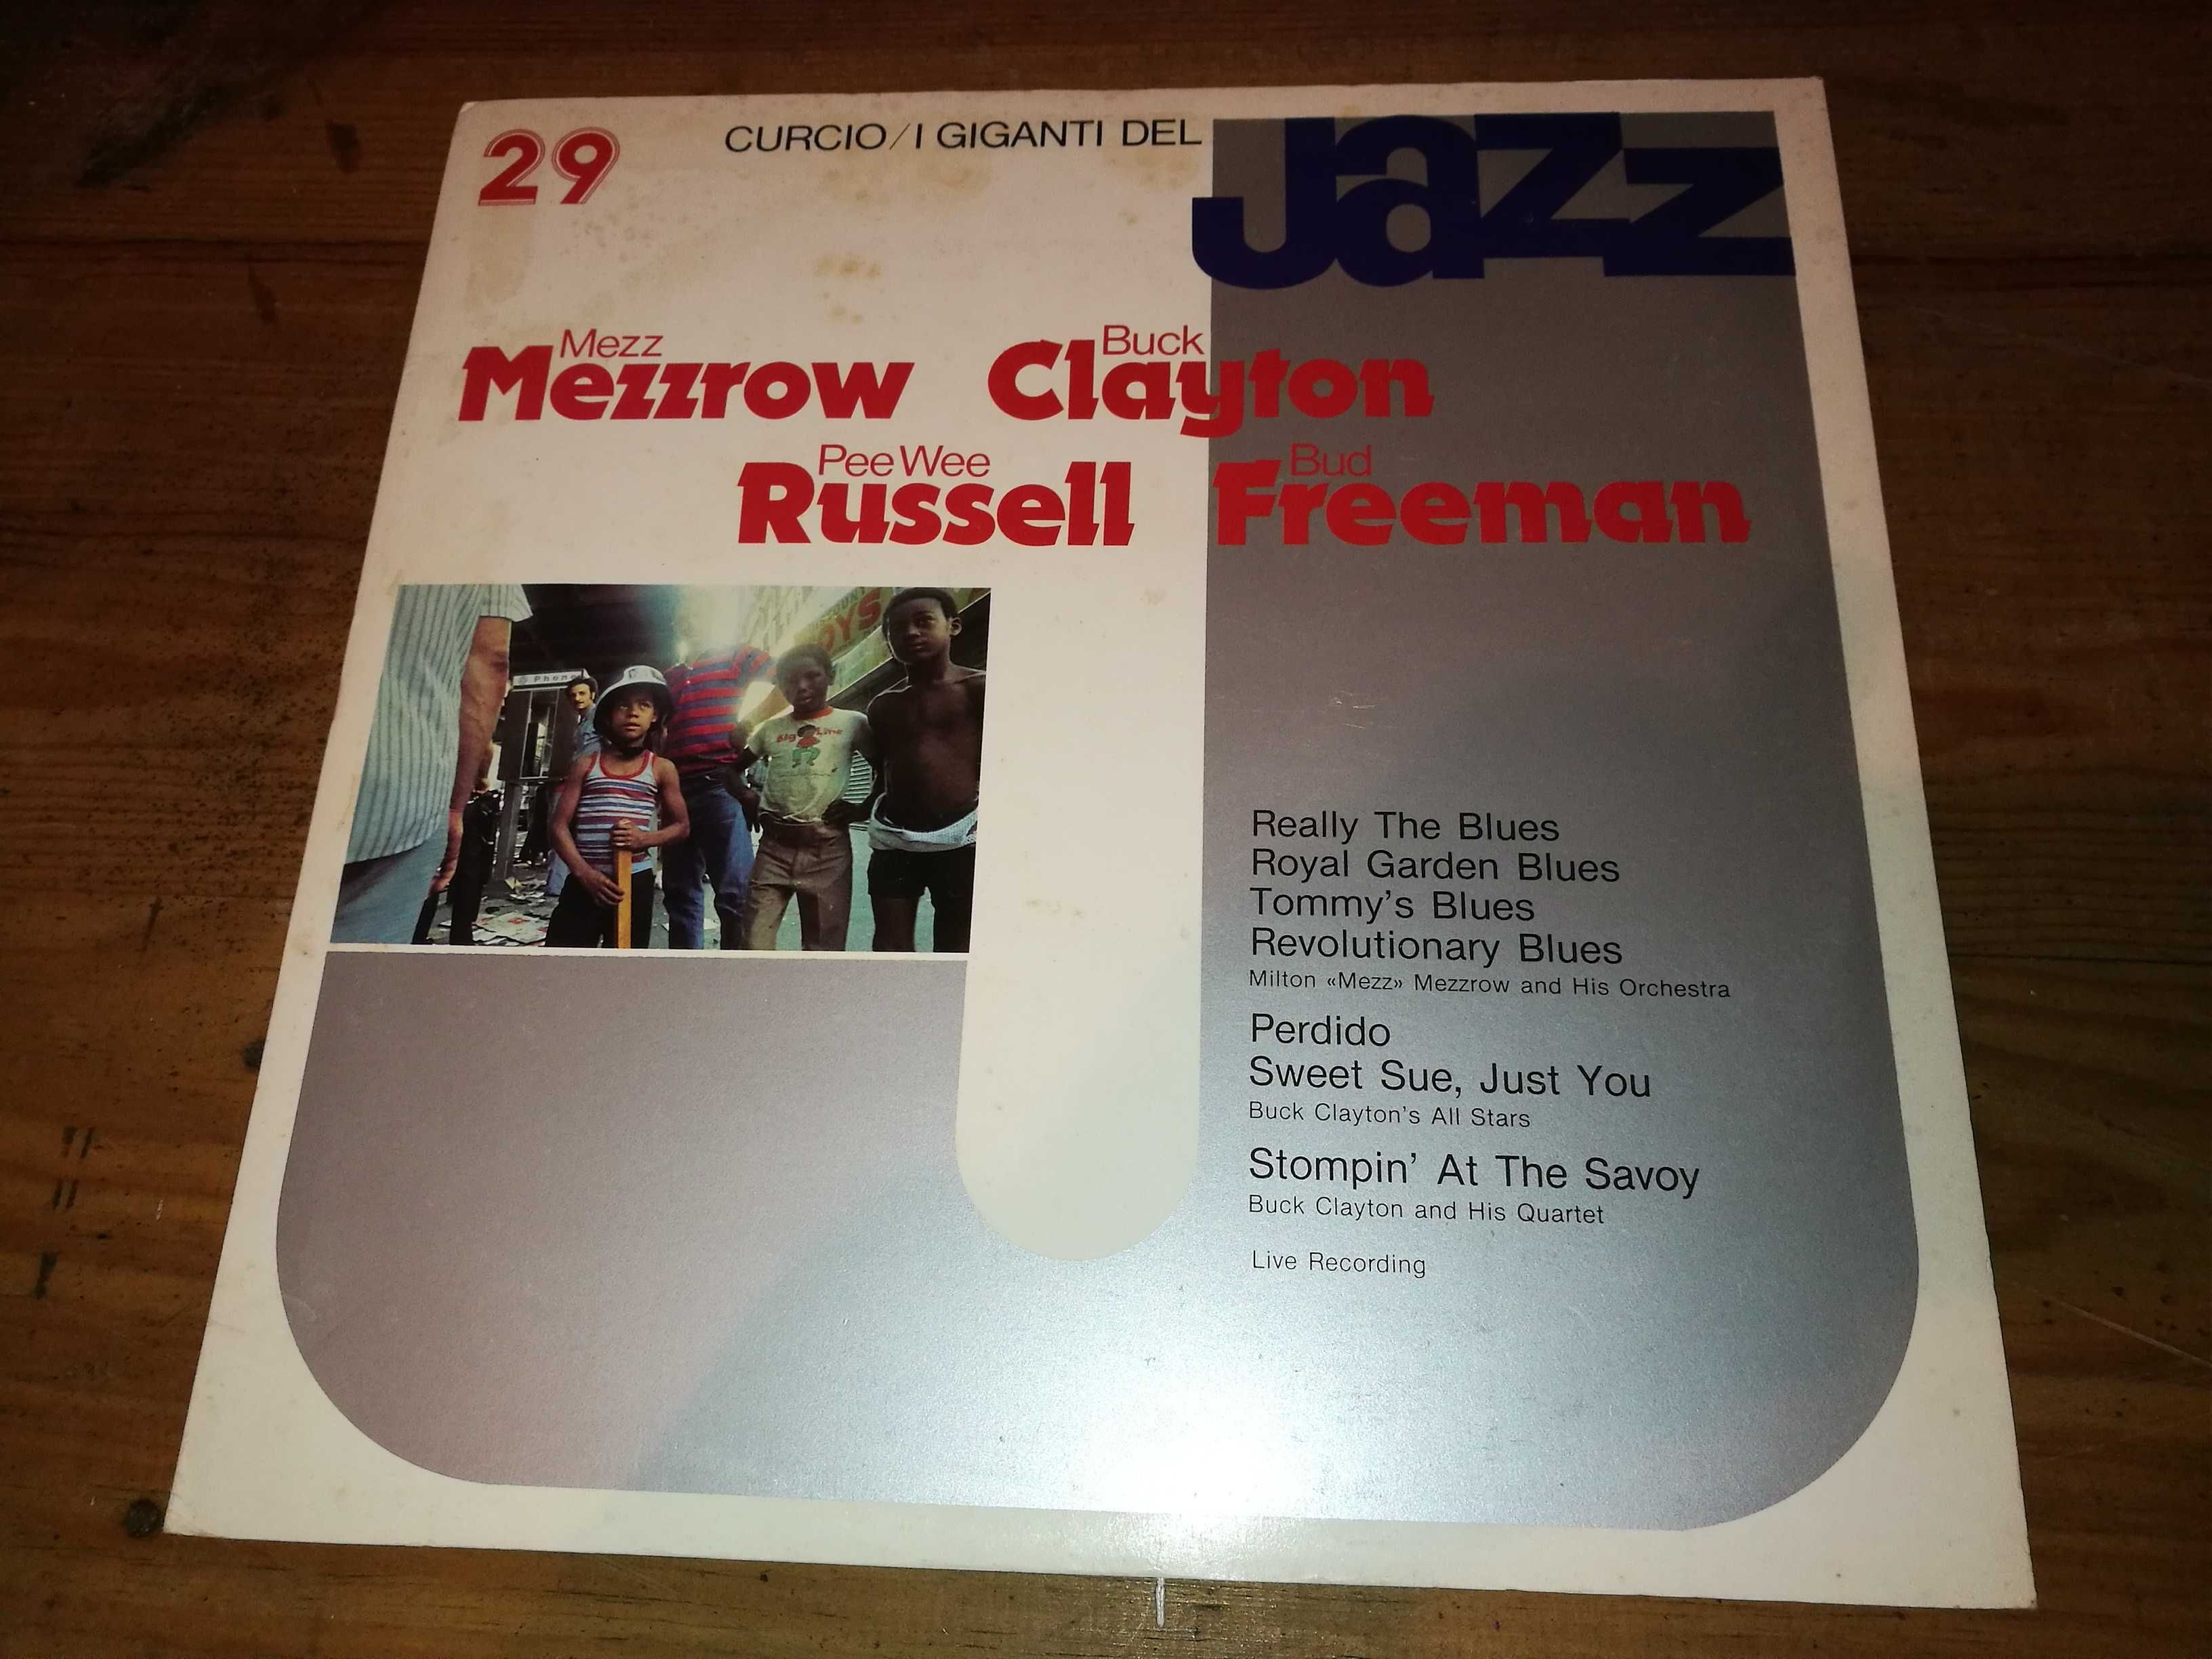 M Mezzrow/B Clayton/P W Russel/B Freeman -Curcio I Giganti del Jazz LP